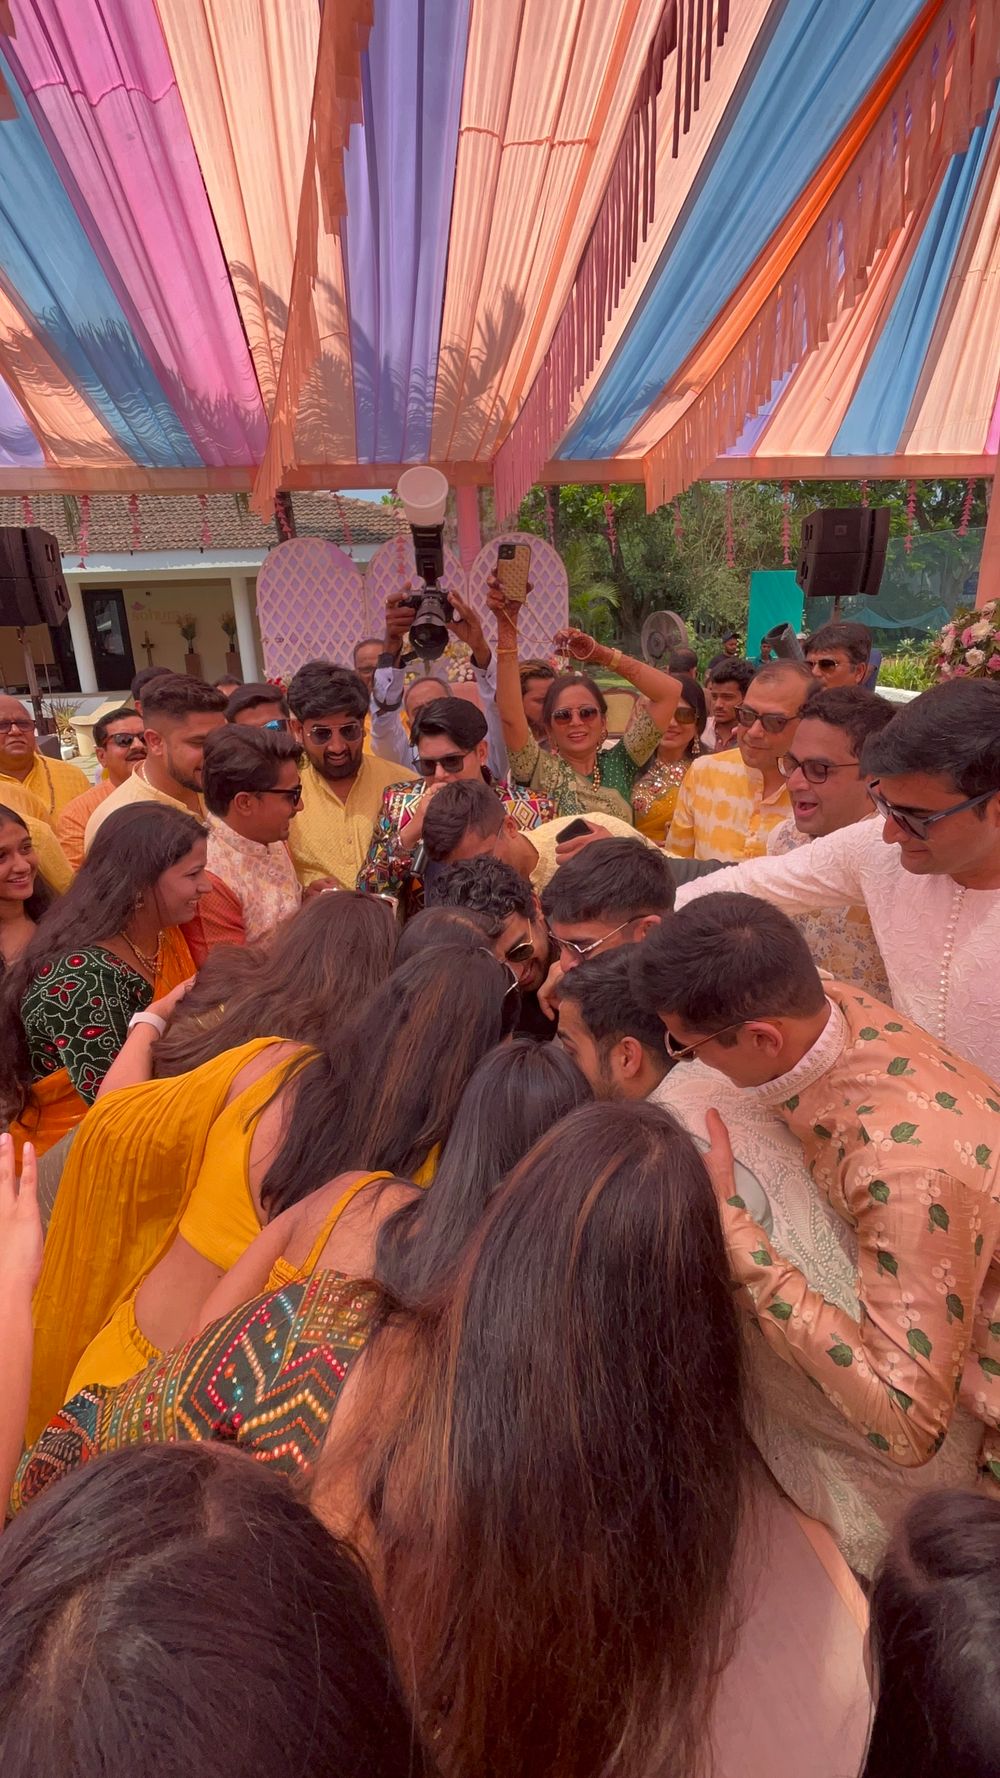 Photo By Anchor Sandesh - Wedding Entertainment 